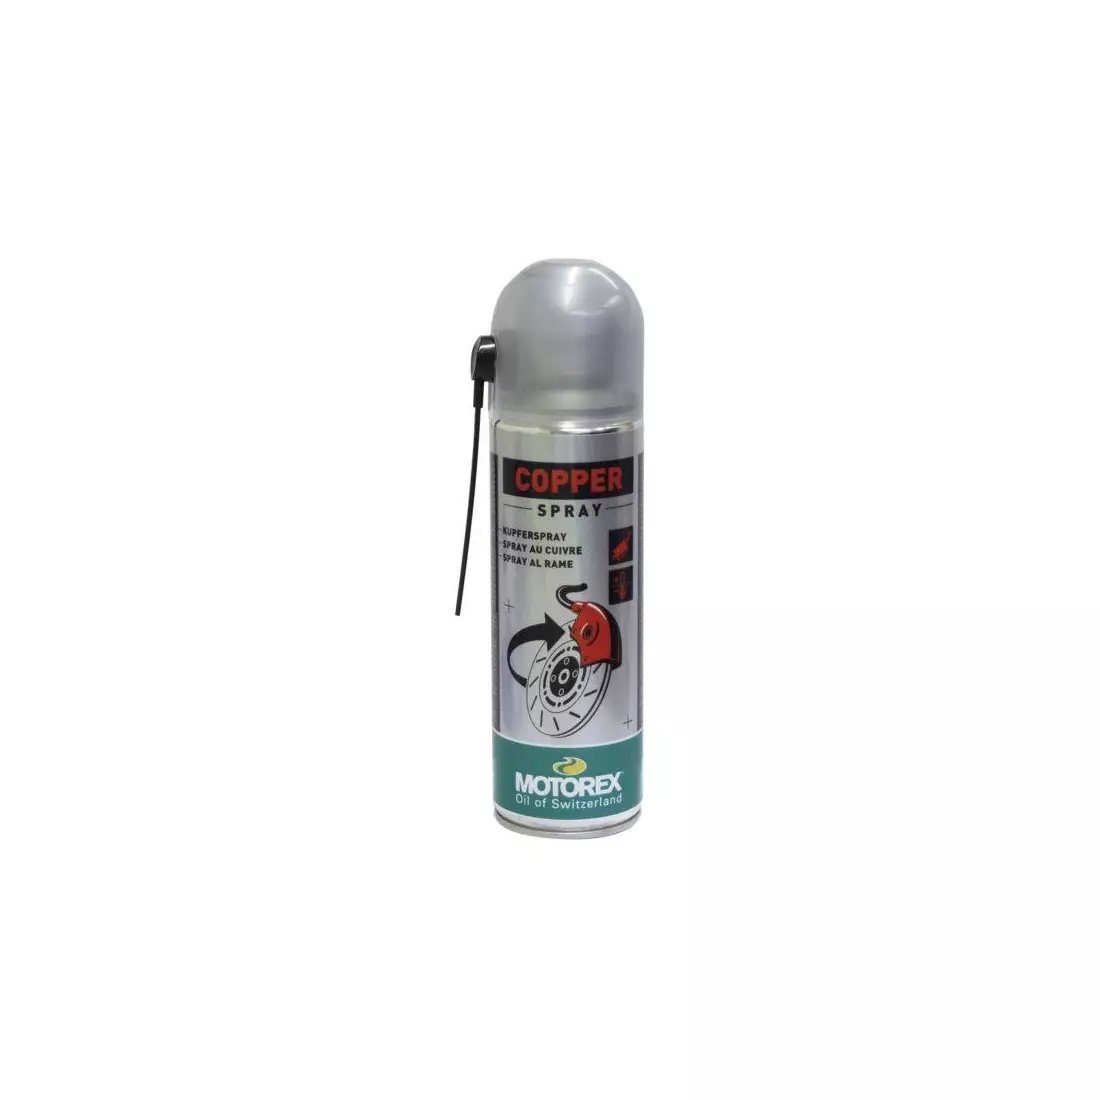 MOTOREX Korrosionsschutzspray COPPER Spray 300ml